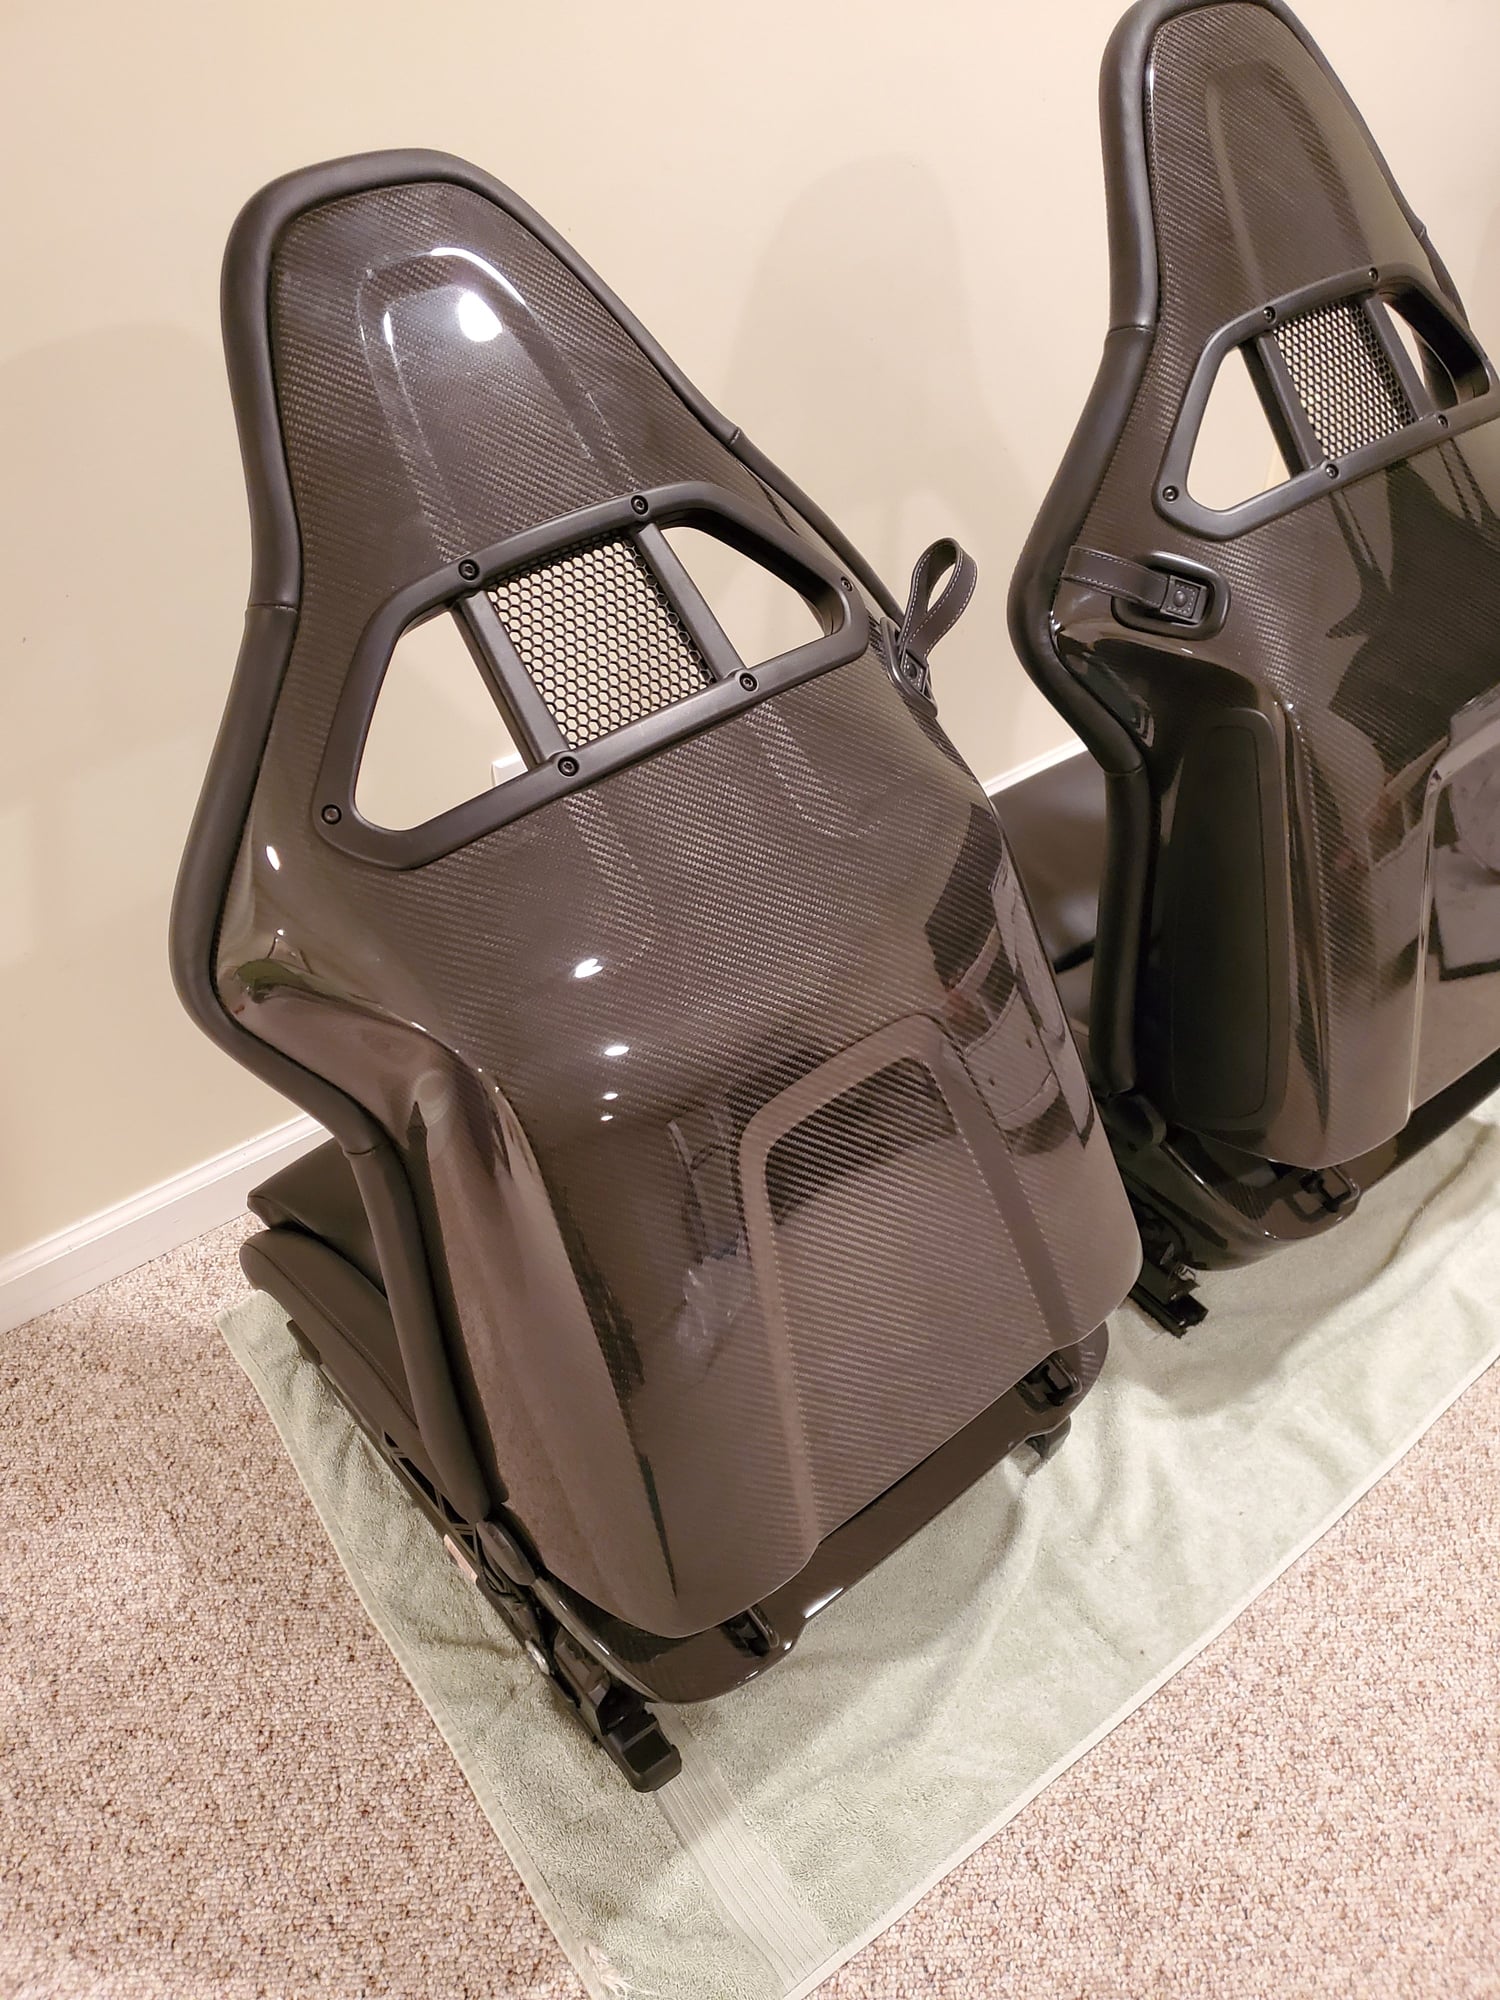 Interior/Upholstery - 997 Carbon Fiber Lightweight Bucket Seats - Black with Porsche Crest in Headrest - Used - 0  All Models - Newark, DE 19711, United States